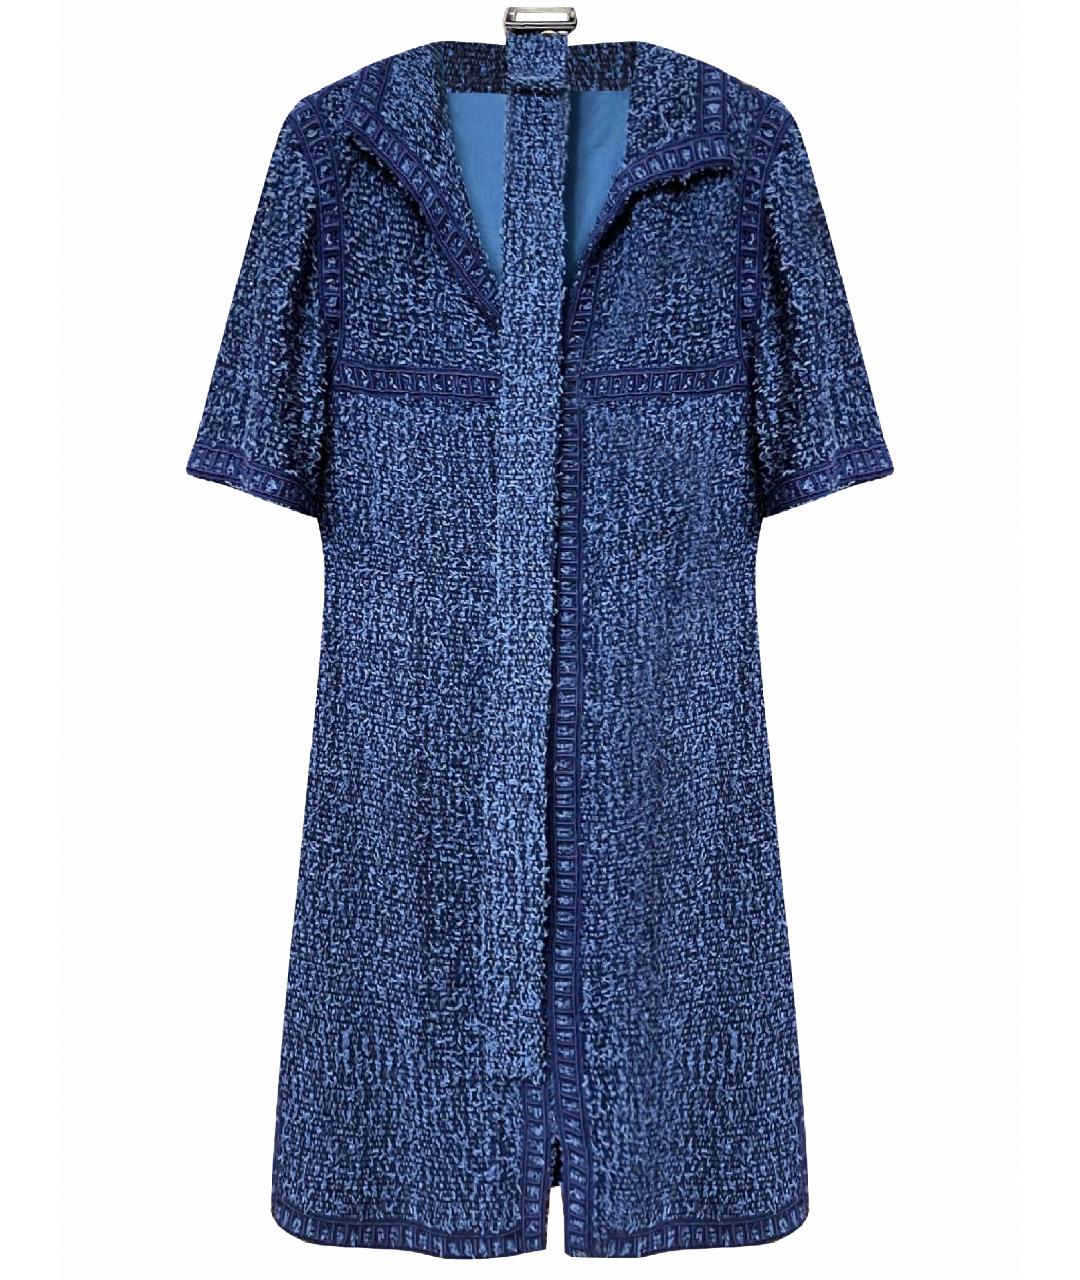 CHANEL PRE-OWNED Синее твидовое повседневное платье, фото 1